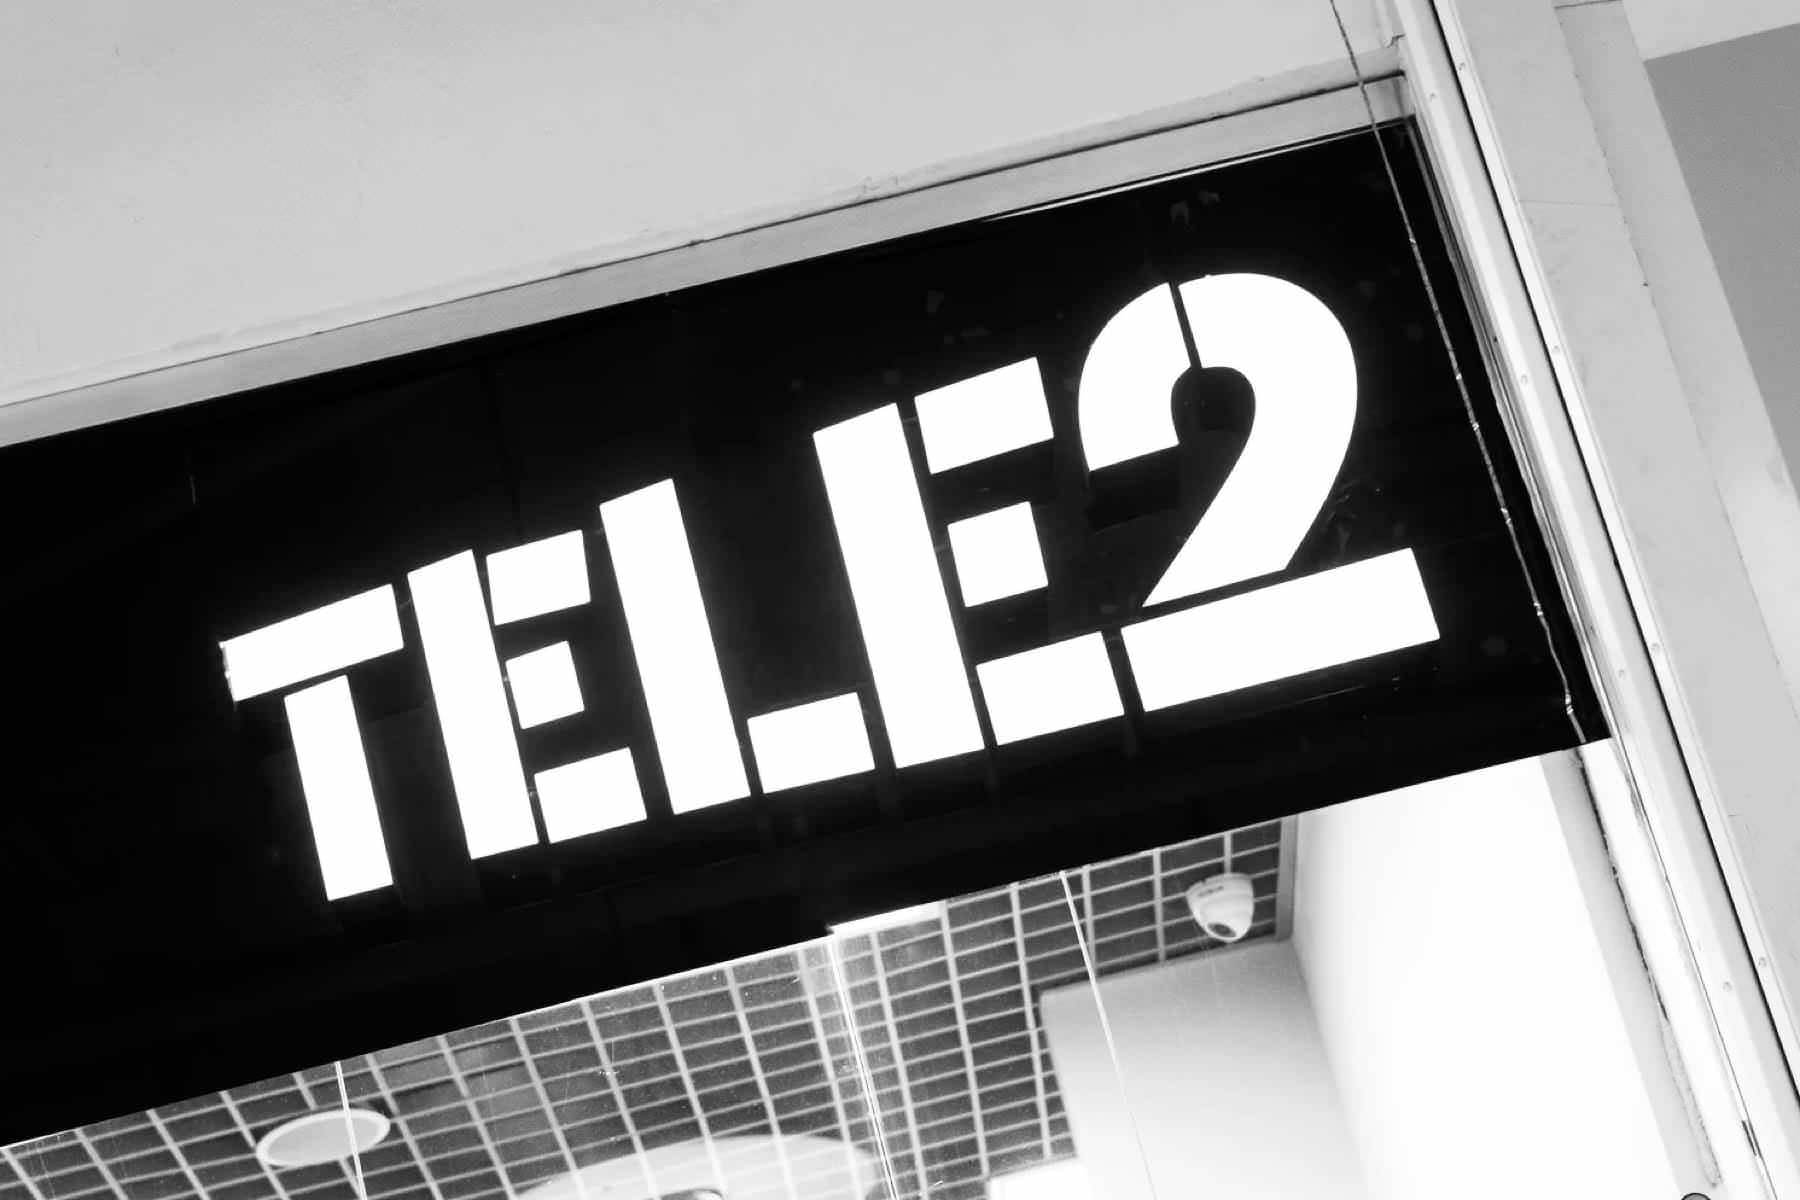 Сотовый оператор Tele2 поднял цены на всех тарифных планах. Абонентная плата вырастет с января